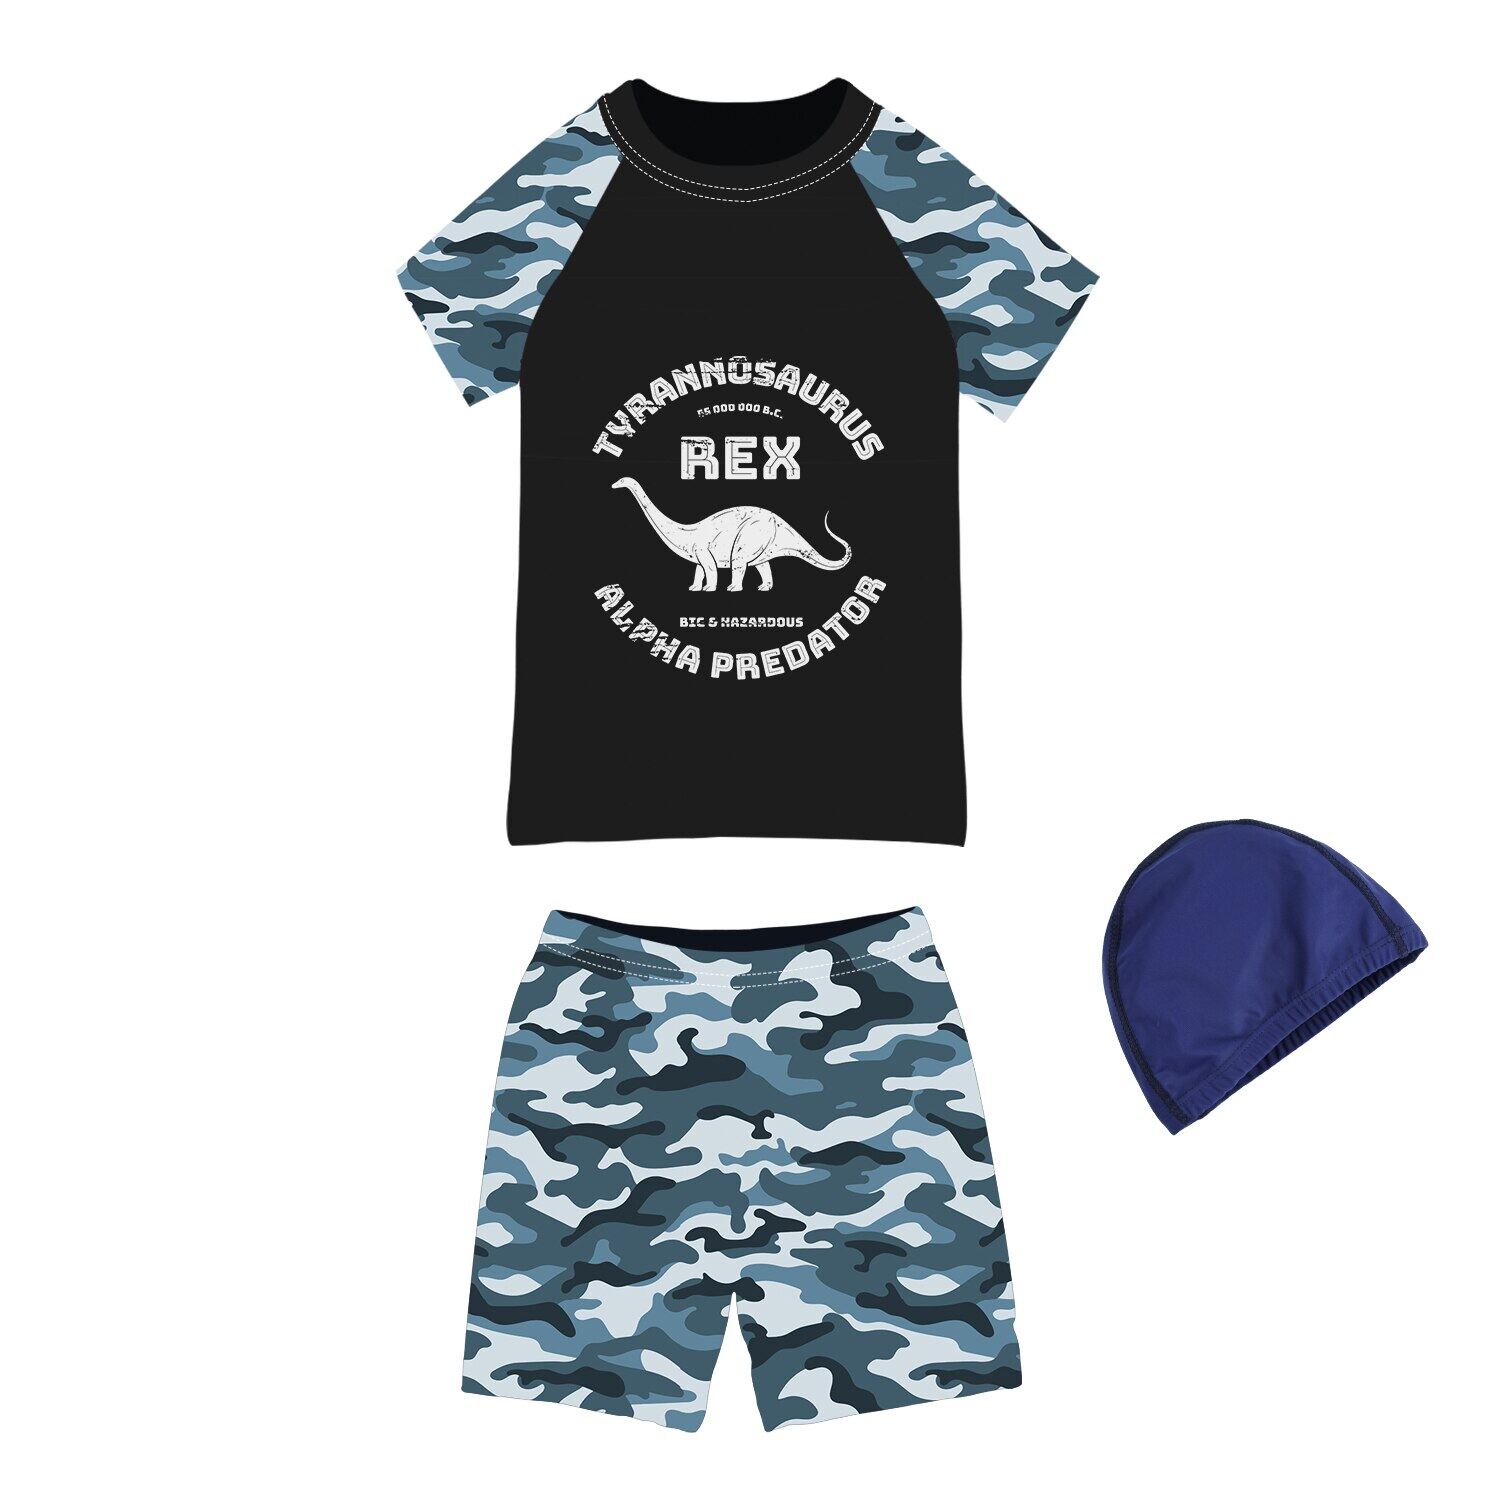 Boys Swim Trunks Swimwear Set Rash Guard Tops Kids Bathing Suit Cartoon Swimsuit Quick Dry Beach Outfit 3-8 Years 